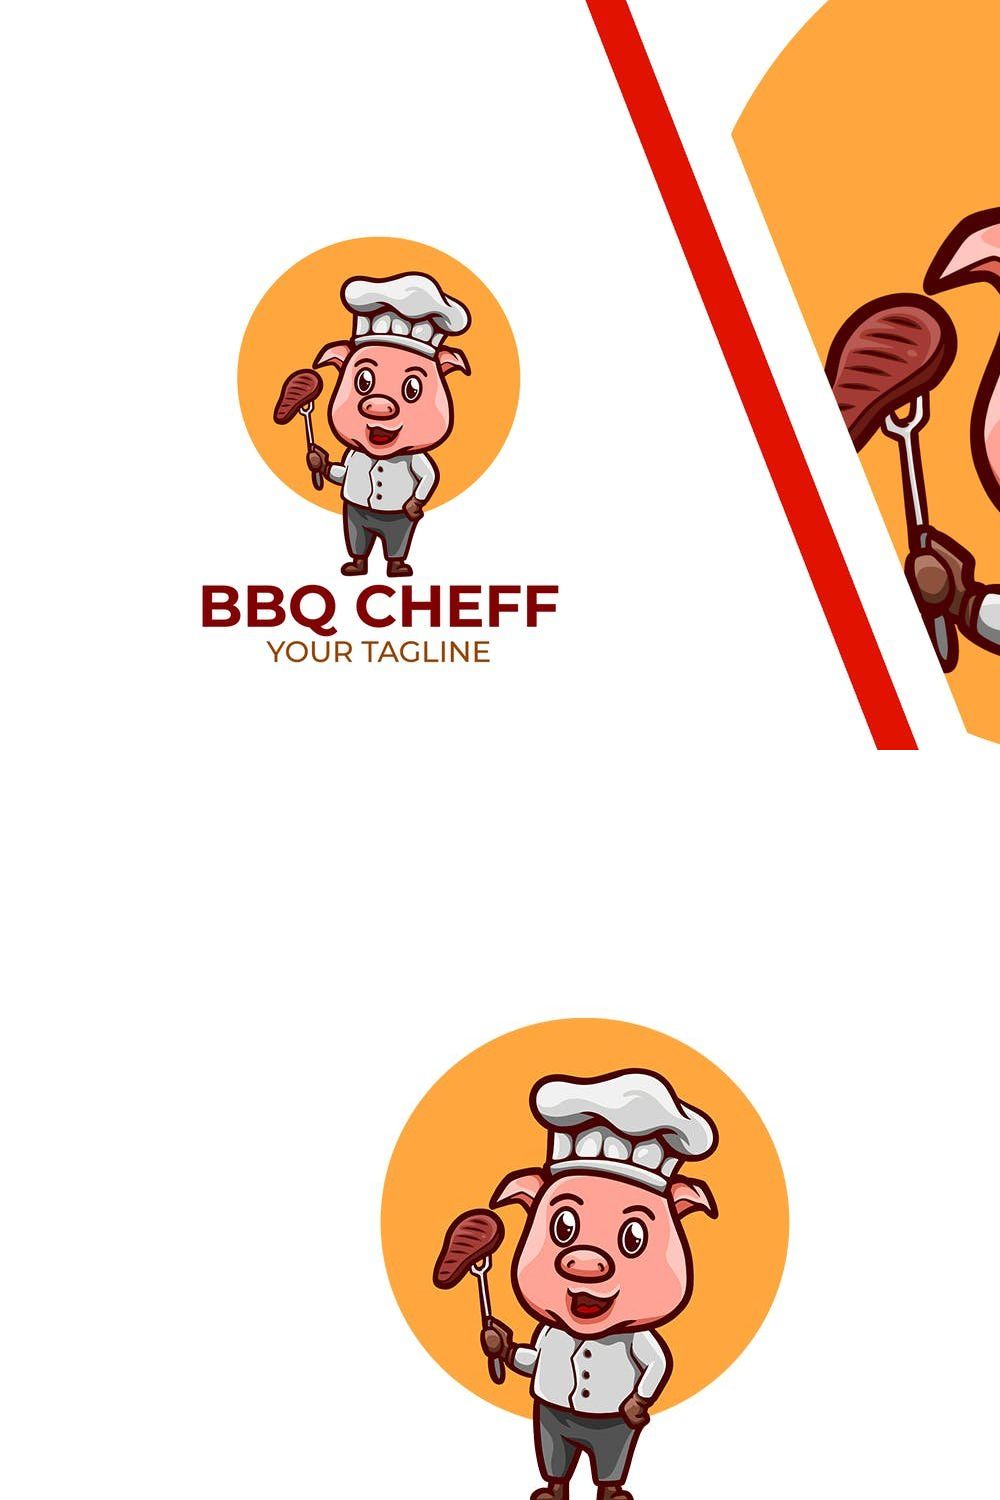 BBQ Chef Mascot pinterest preview image.